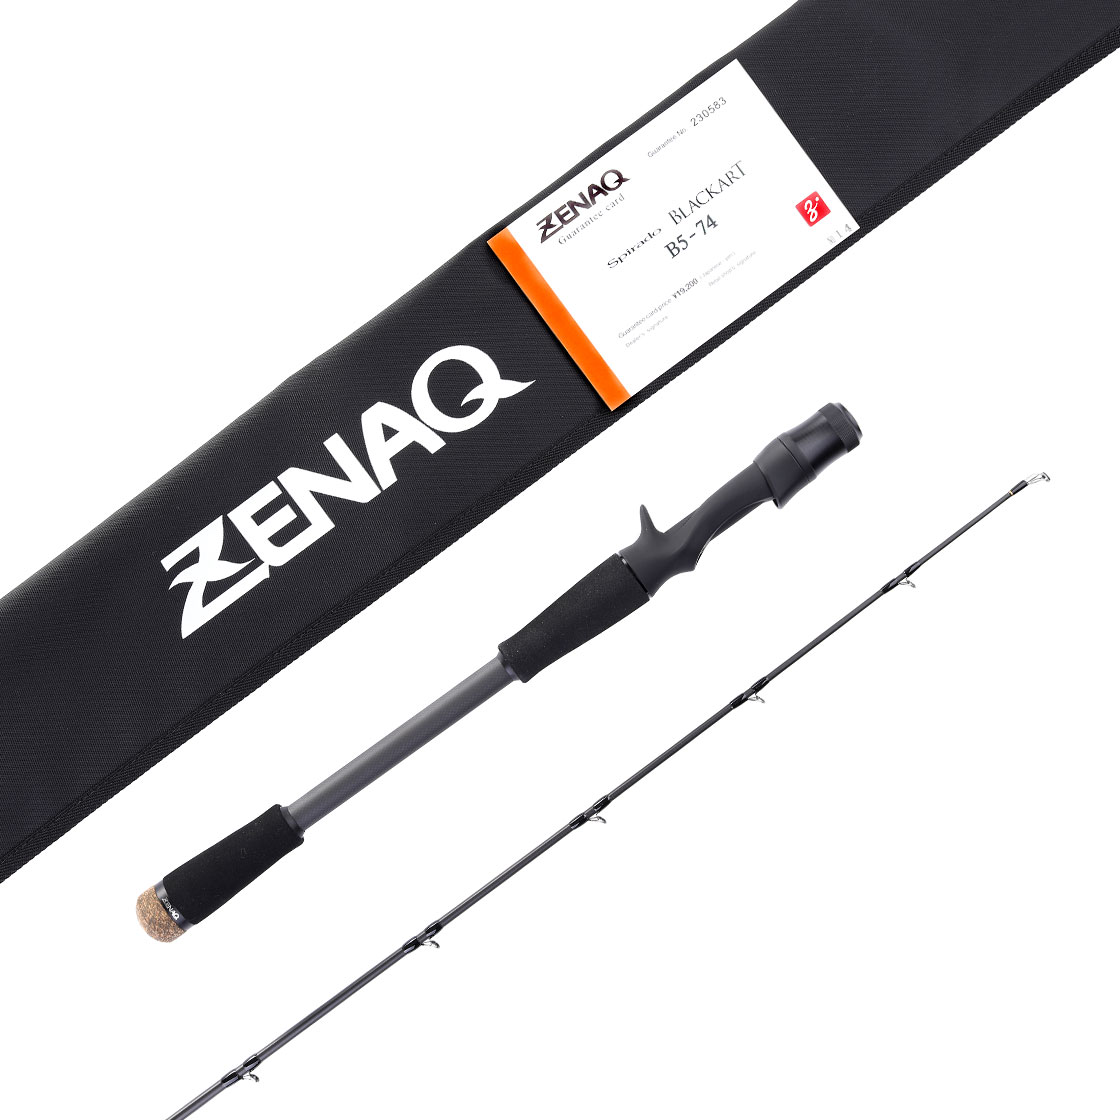 Zenaq Spirado Blackart B5-74 Baitcasting Rod 1/2 - 3 oz, Baitcasting Rods, Spinning Rods, Spin Fishing